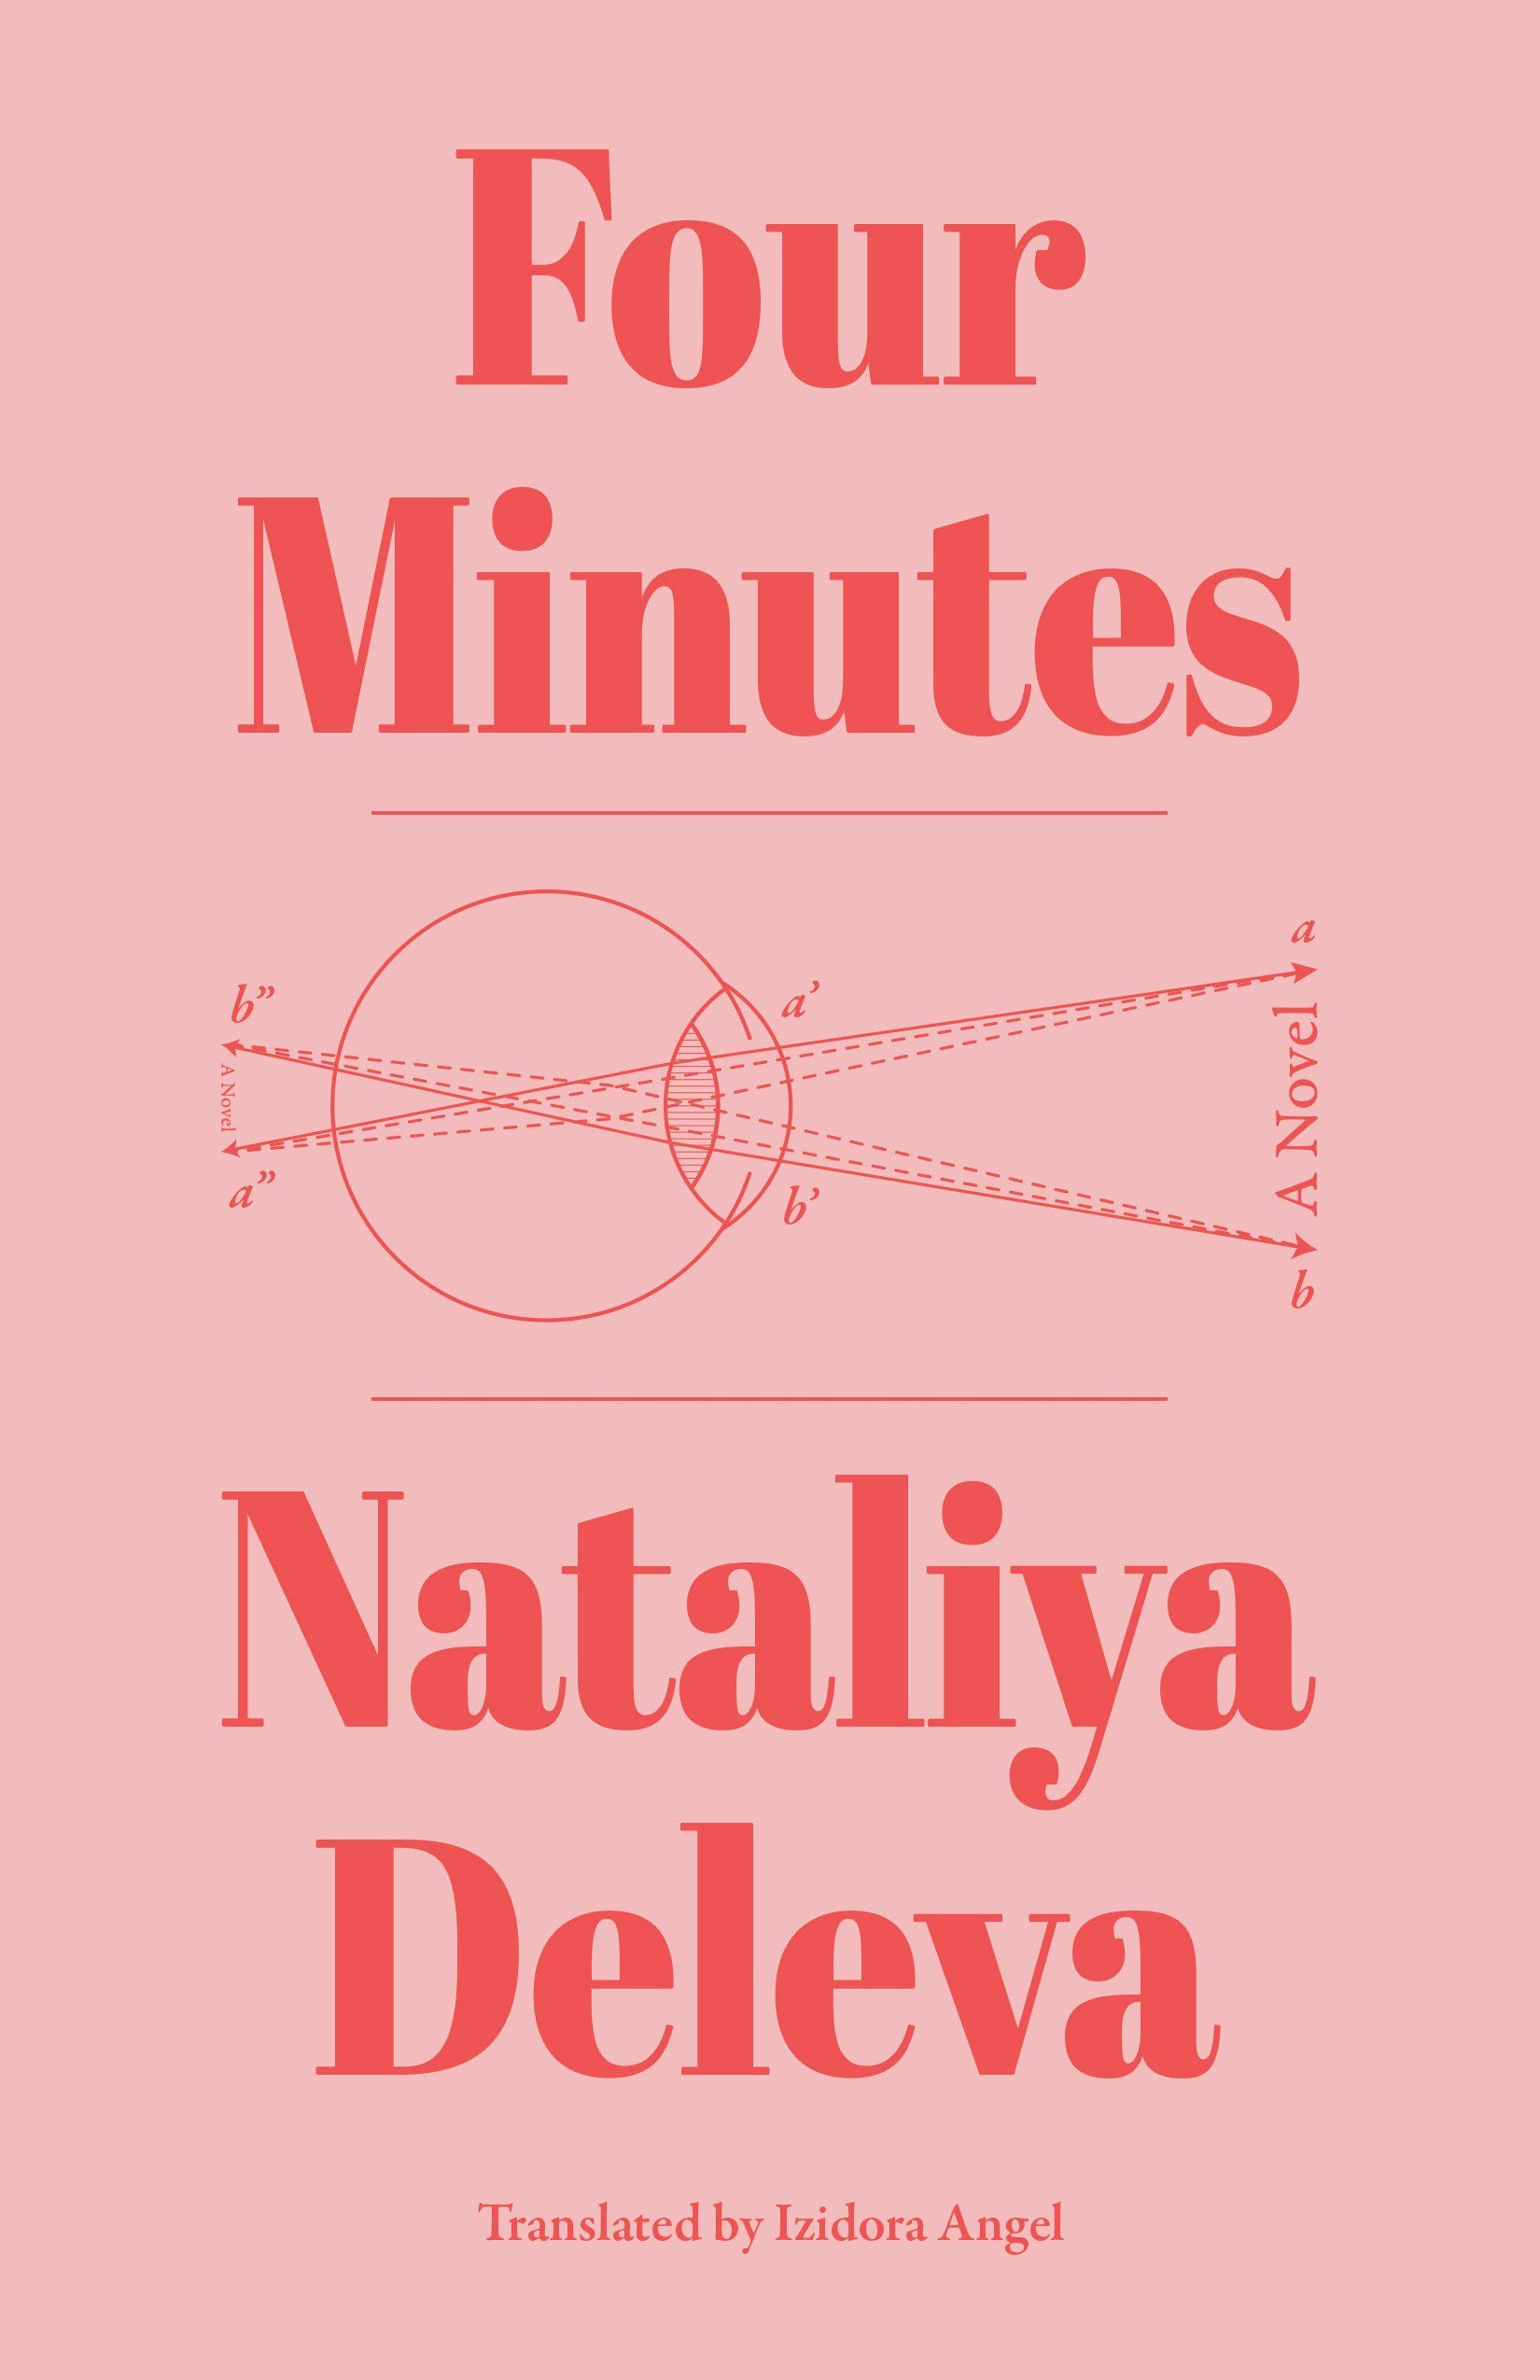 Four Minutes by Nataliya Deleva, translated by Izidora Angel